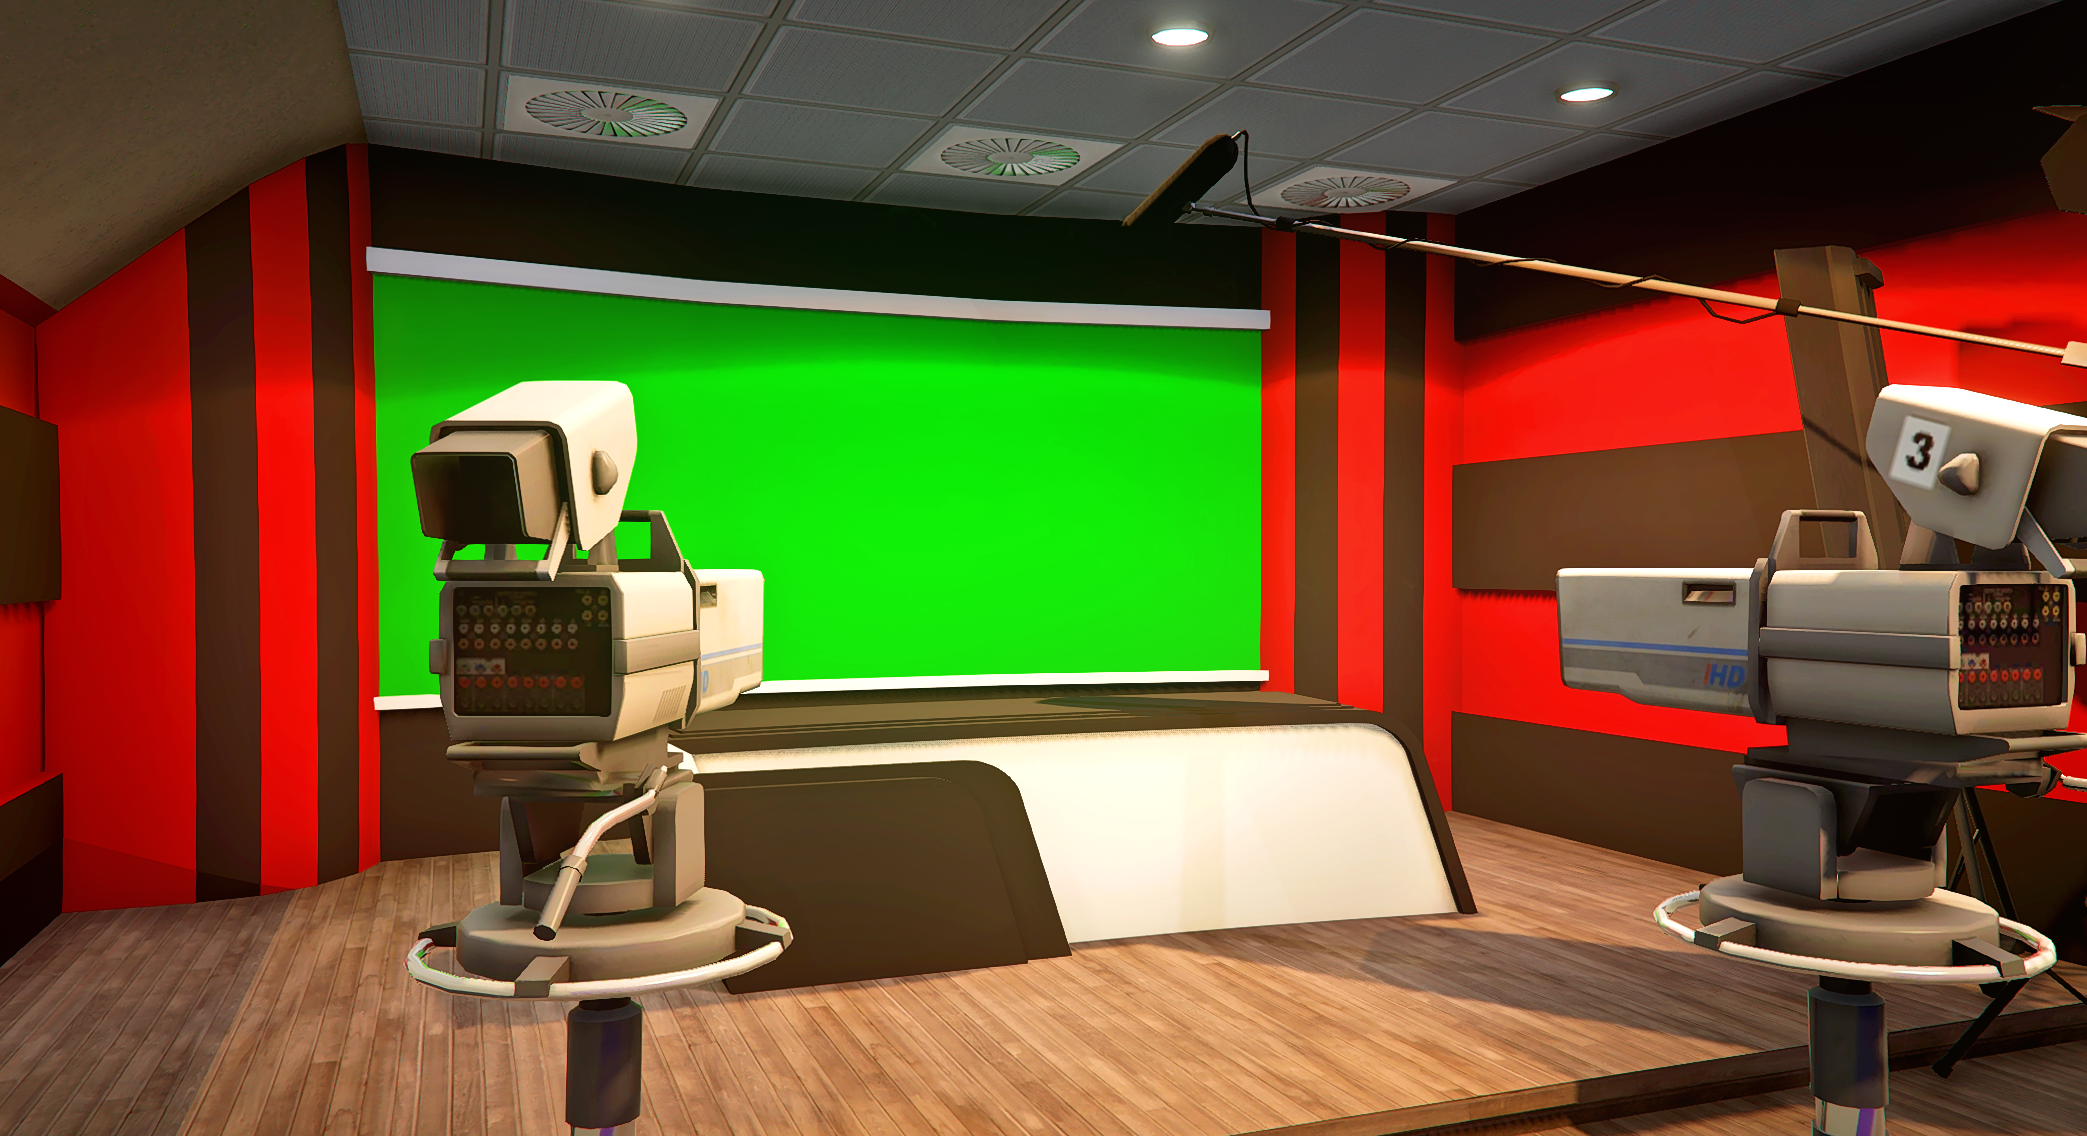 DM TV Studio